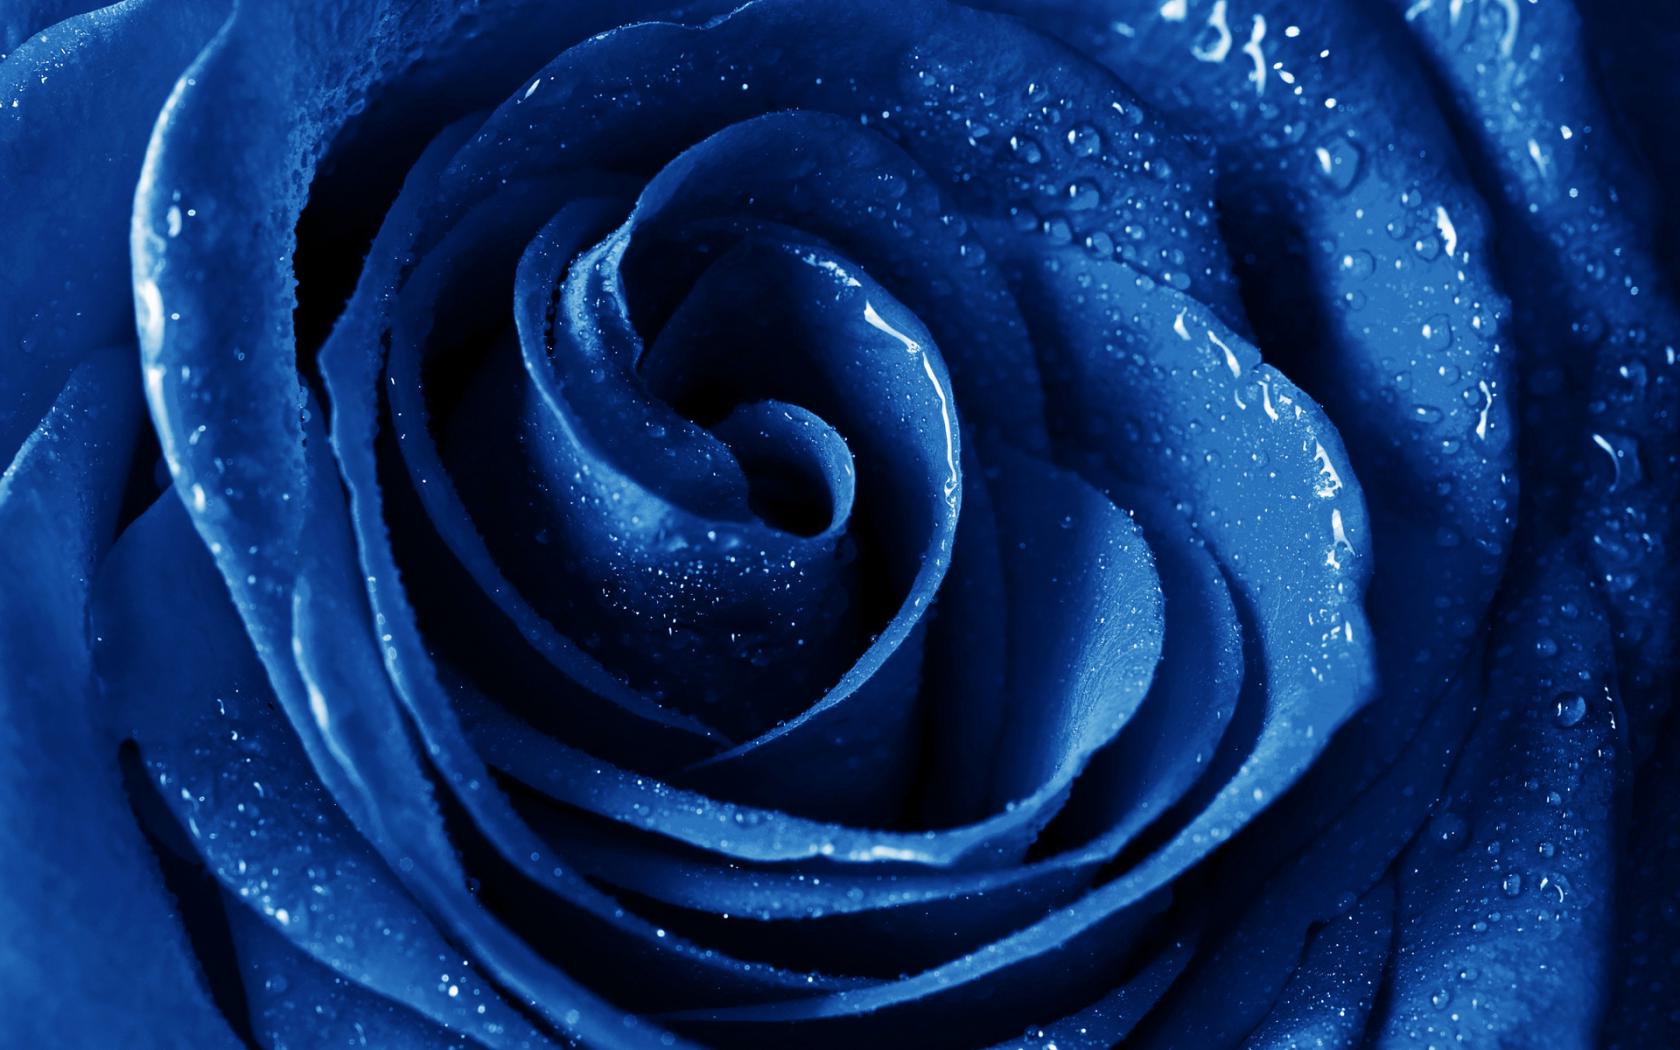 Цветок, роза, синий, капли, макро Цветы картинки, обои рабочий стол